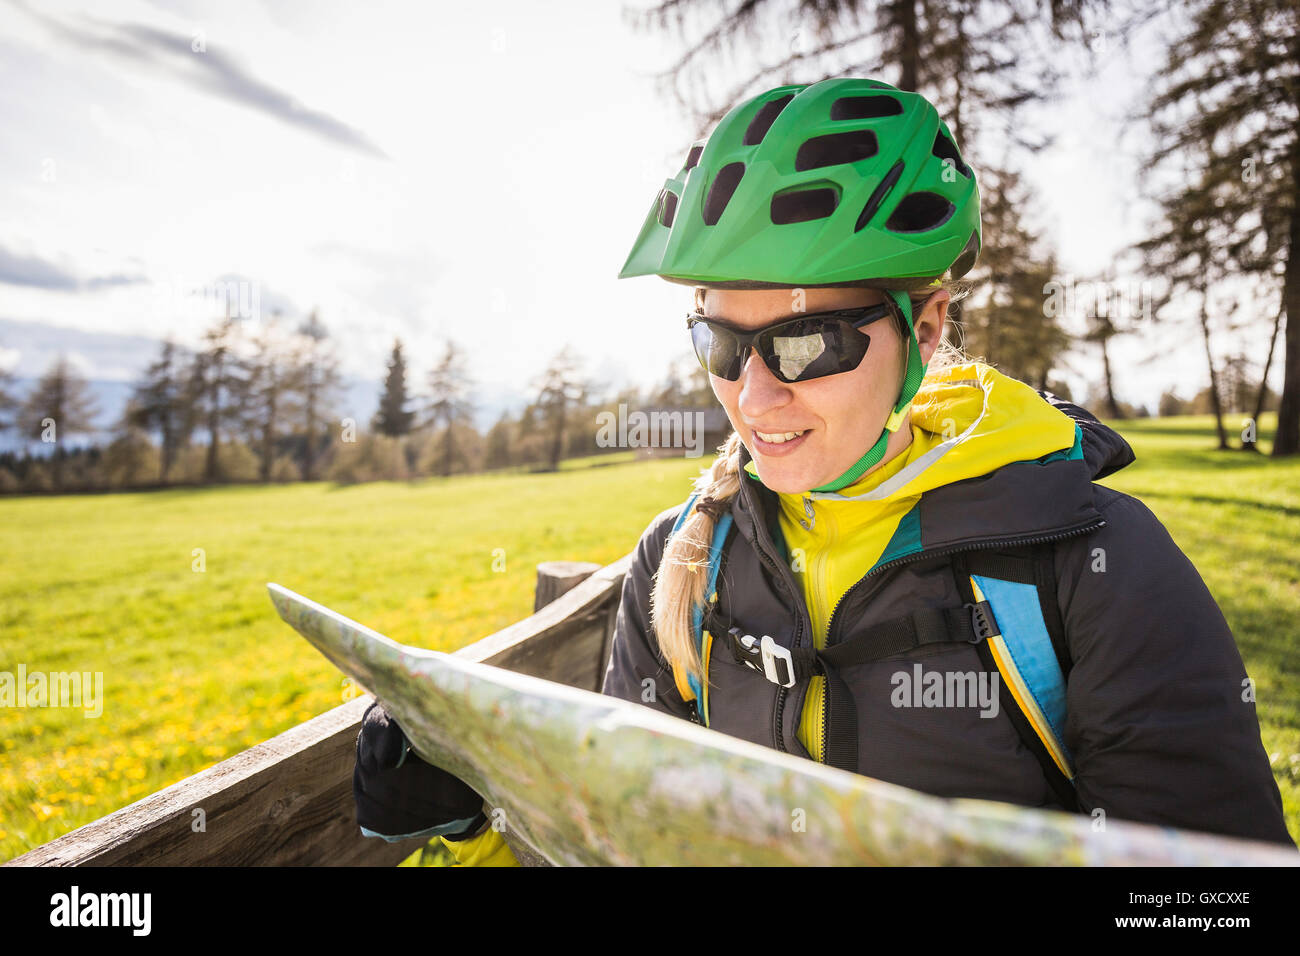 Usando casco de bicicleta fotografías e imágenes de alta resolución -  Página 8 - Alamy